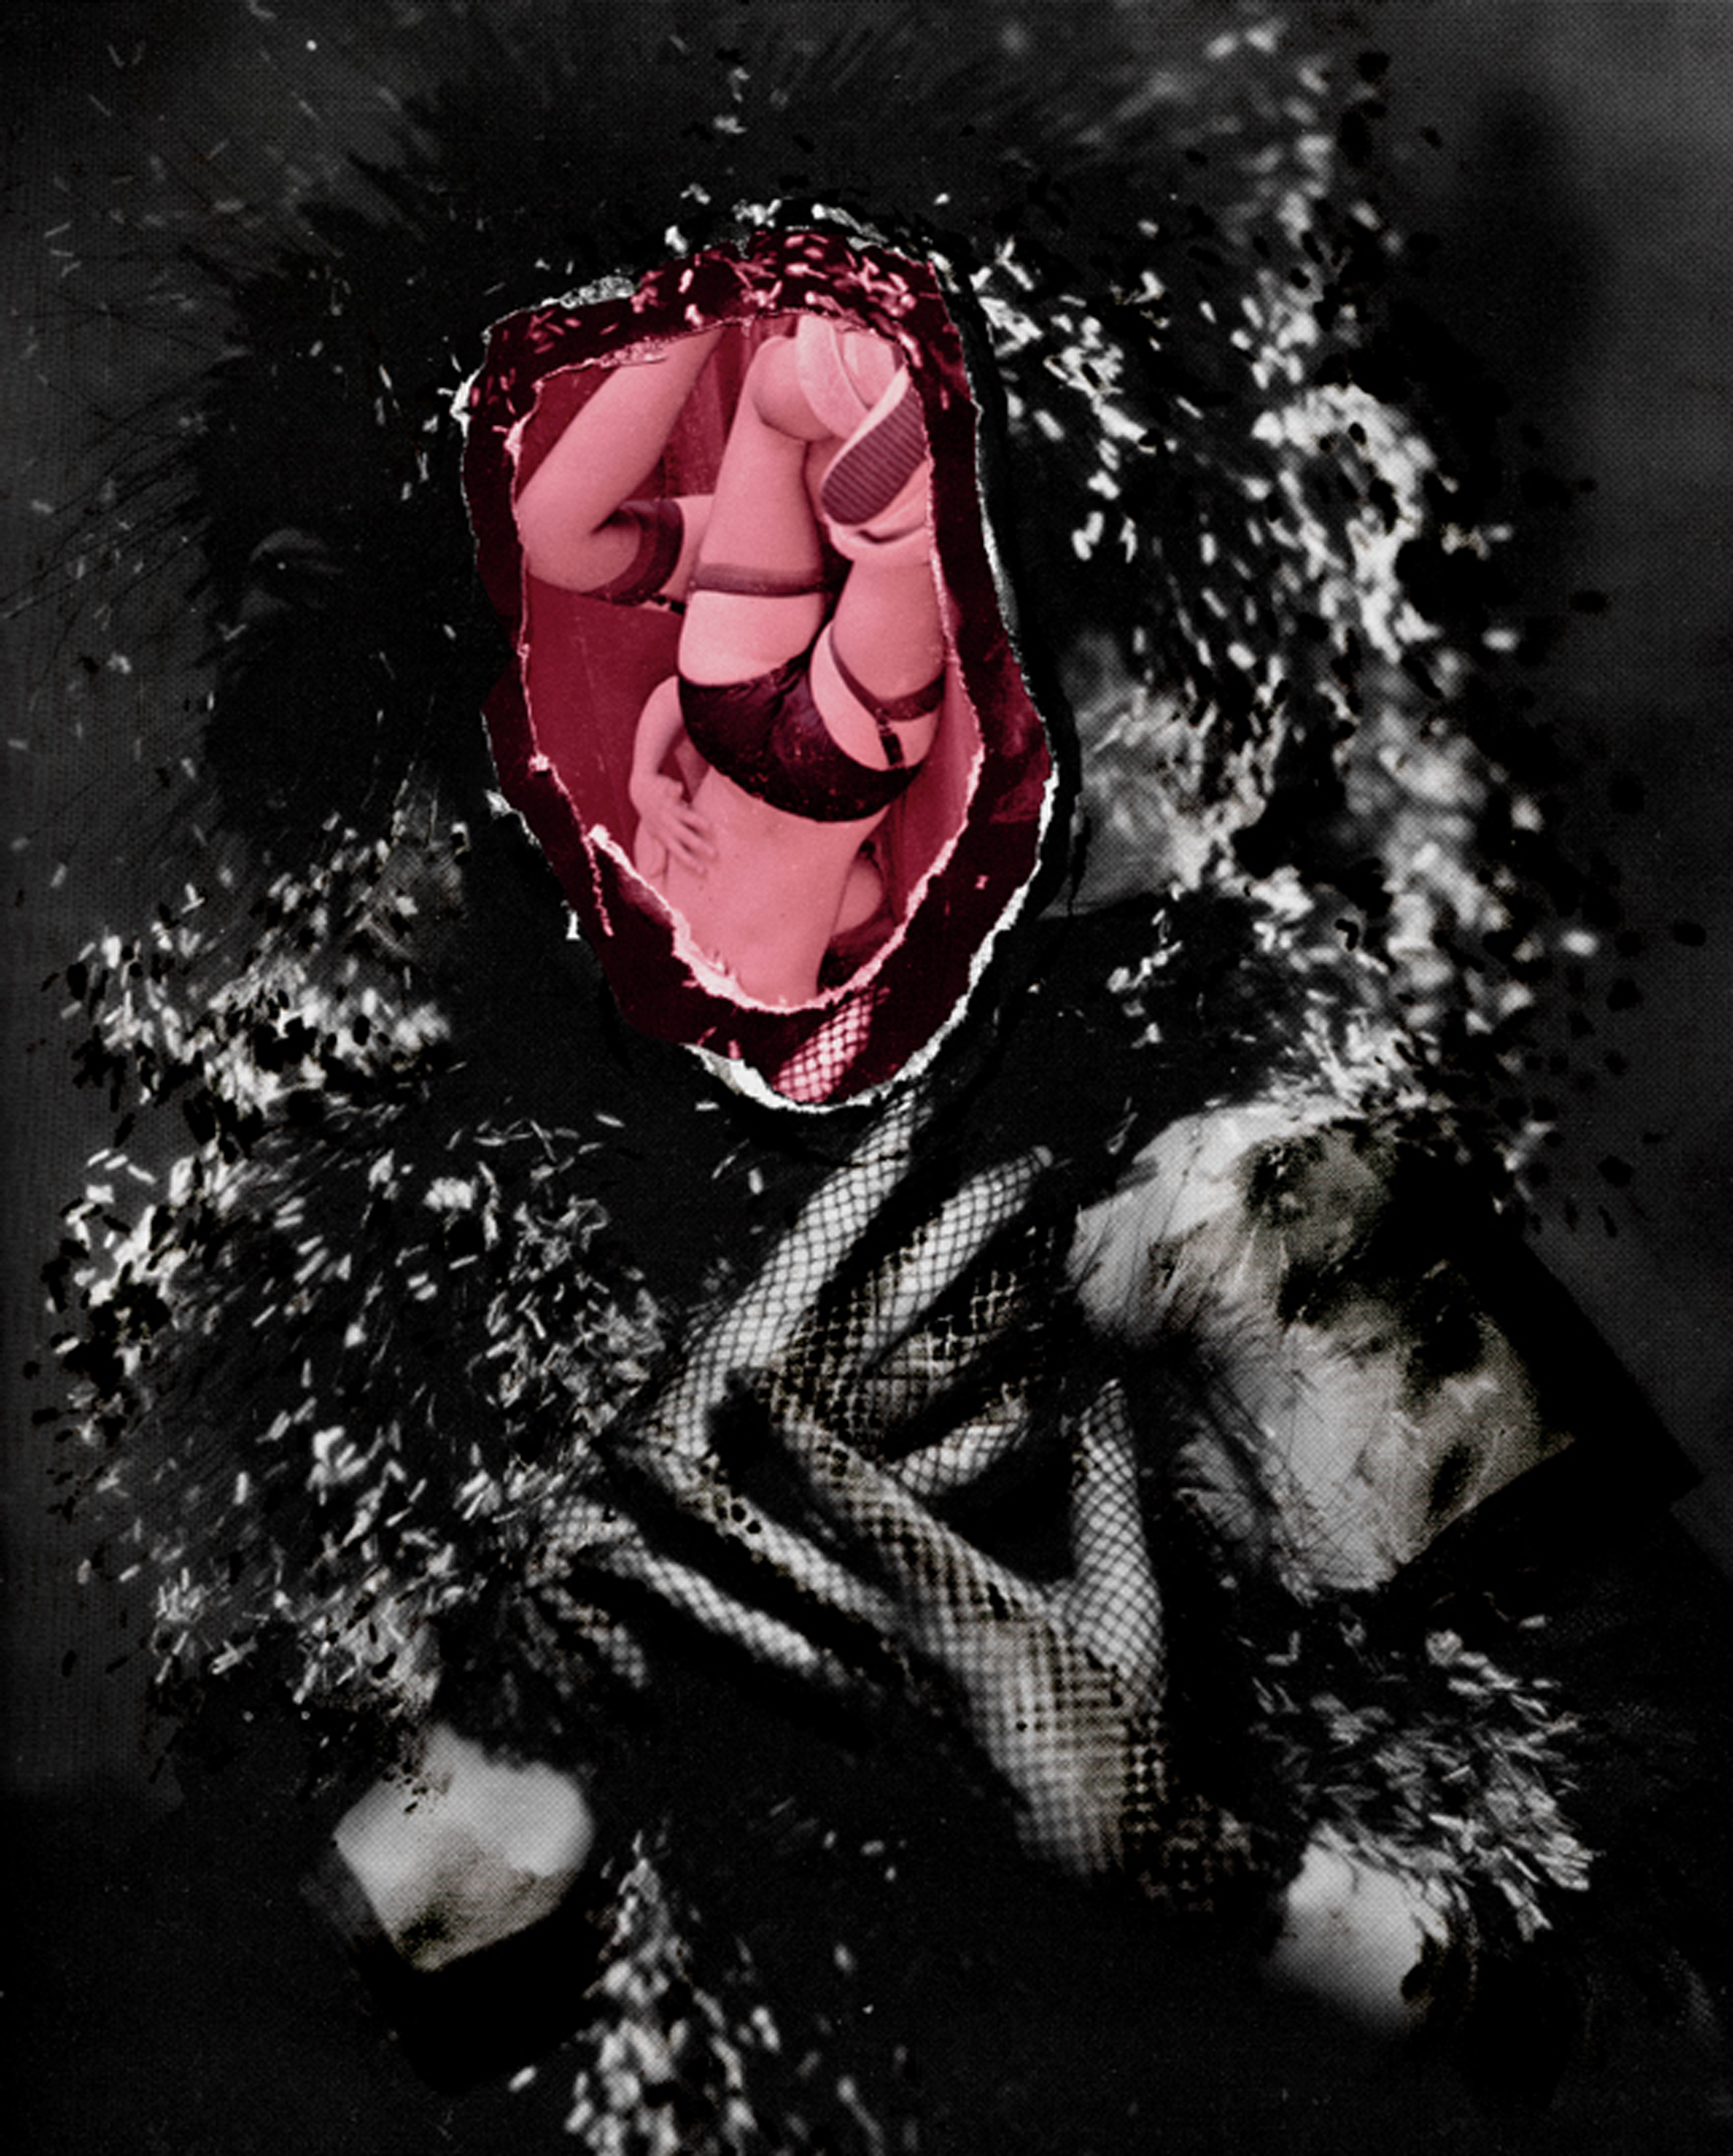   DERIC CARNER   Here Lies The Heart,&nbsp; mounted c-print, 22" x 18", 2014 